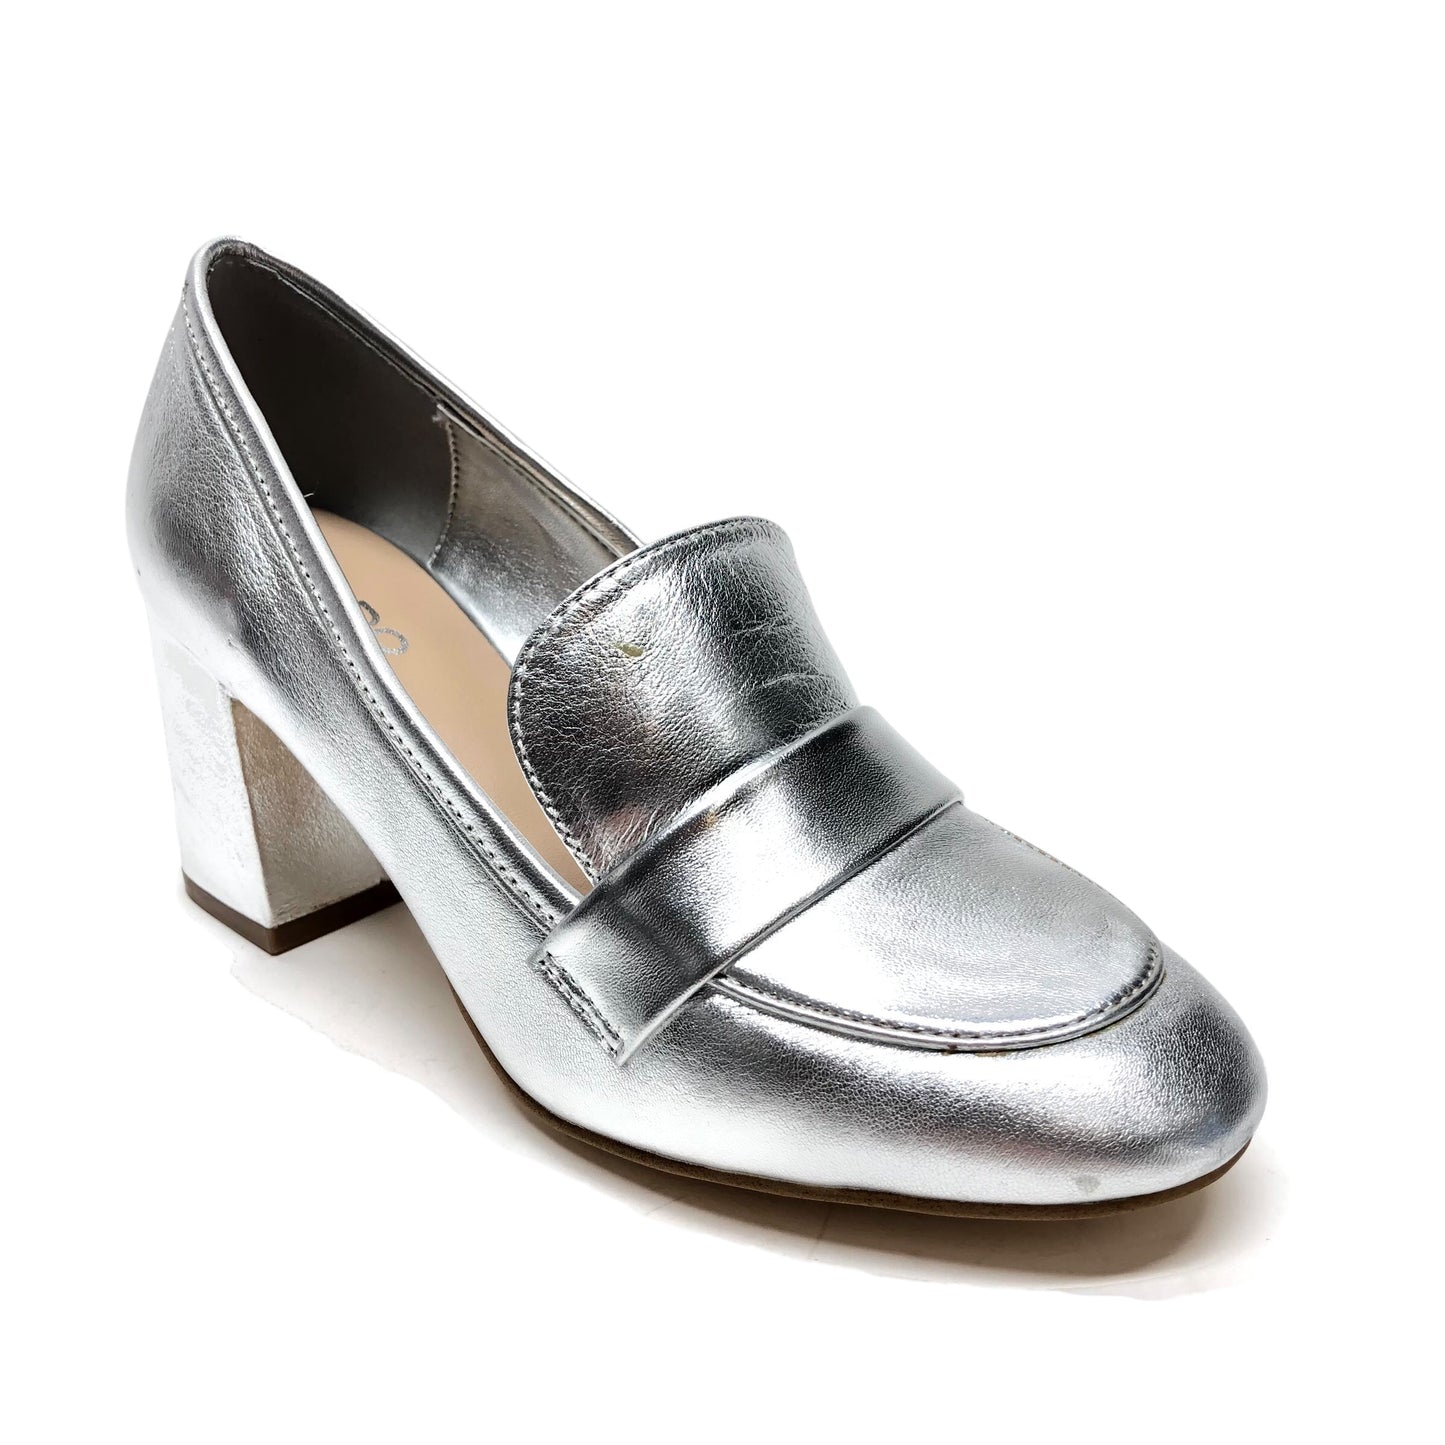 Silver Shoes Heels Block Aldo, Size 6